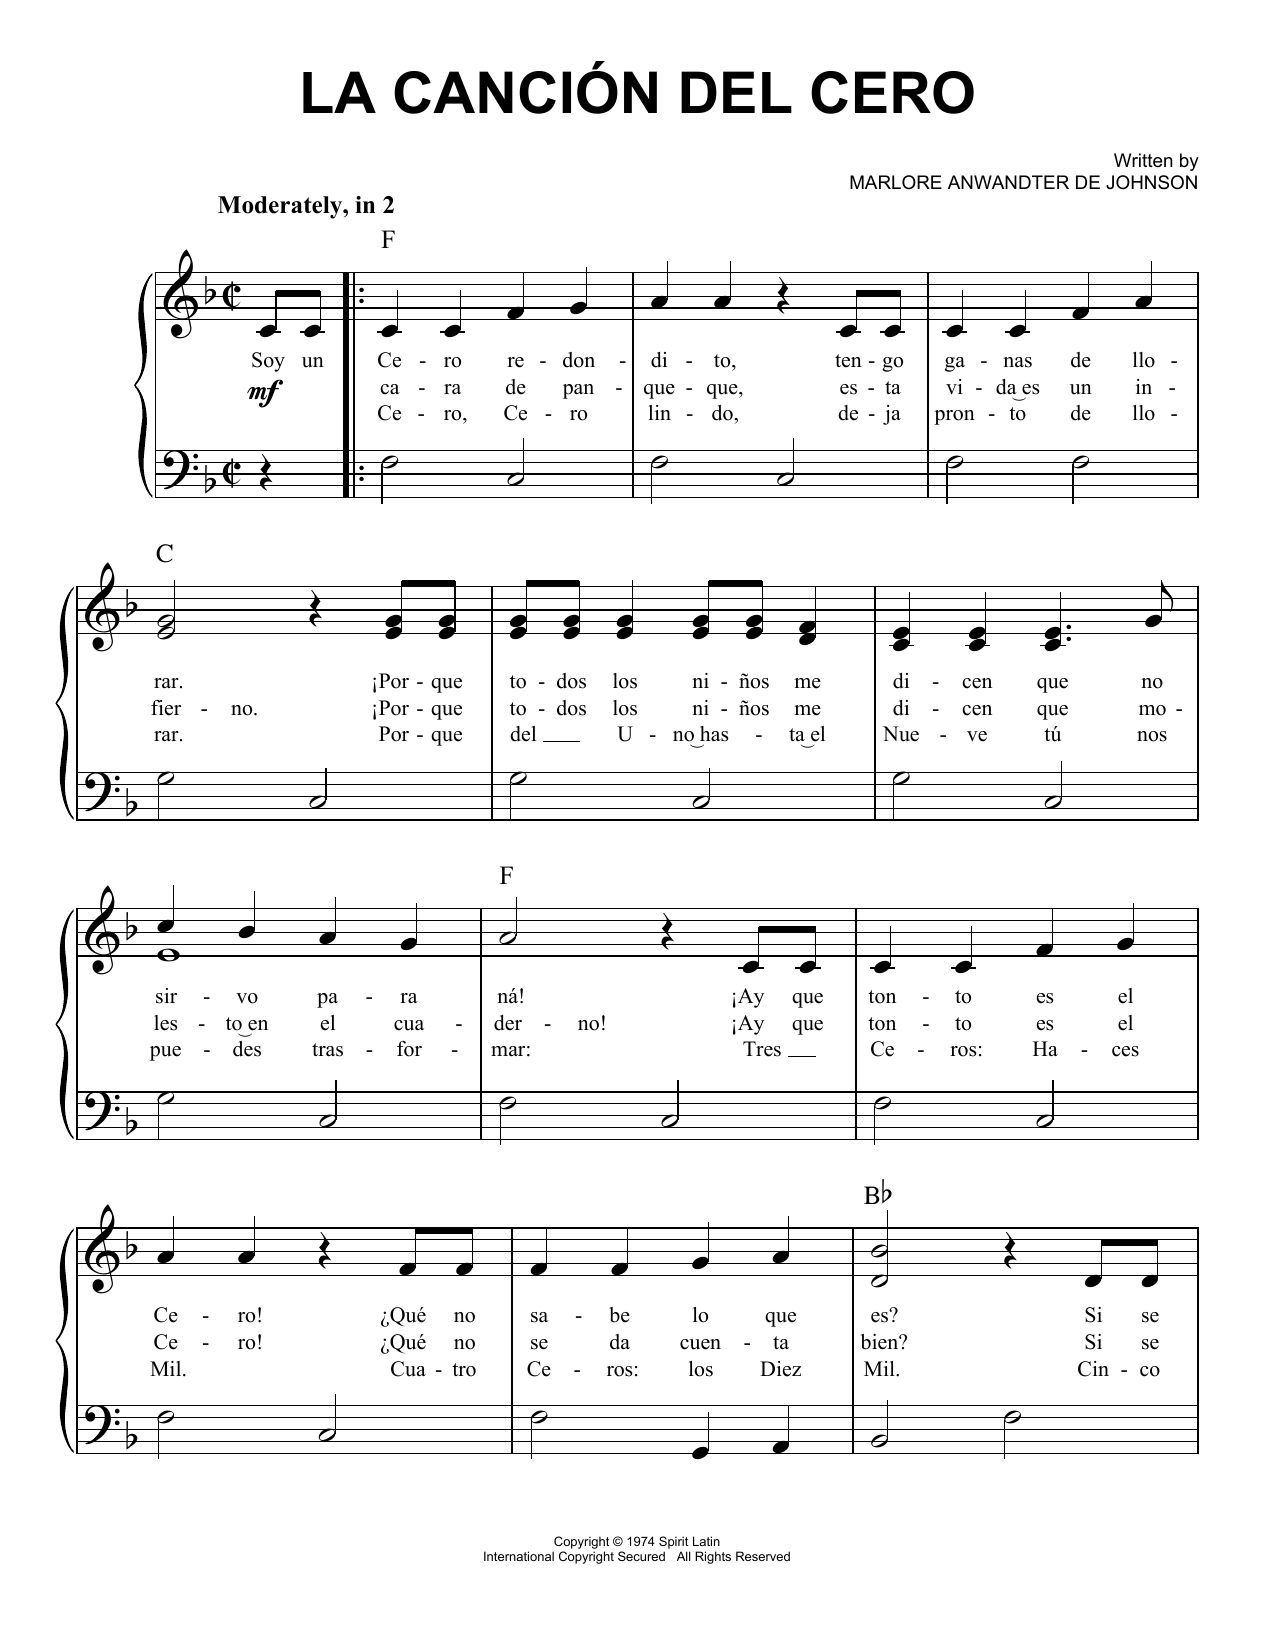 Marlore Anwandter de Johnson La Cancion Del Cero Sheet Music Notes & Chords for Easy Piano - Download or Print PDF